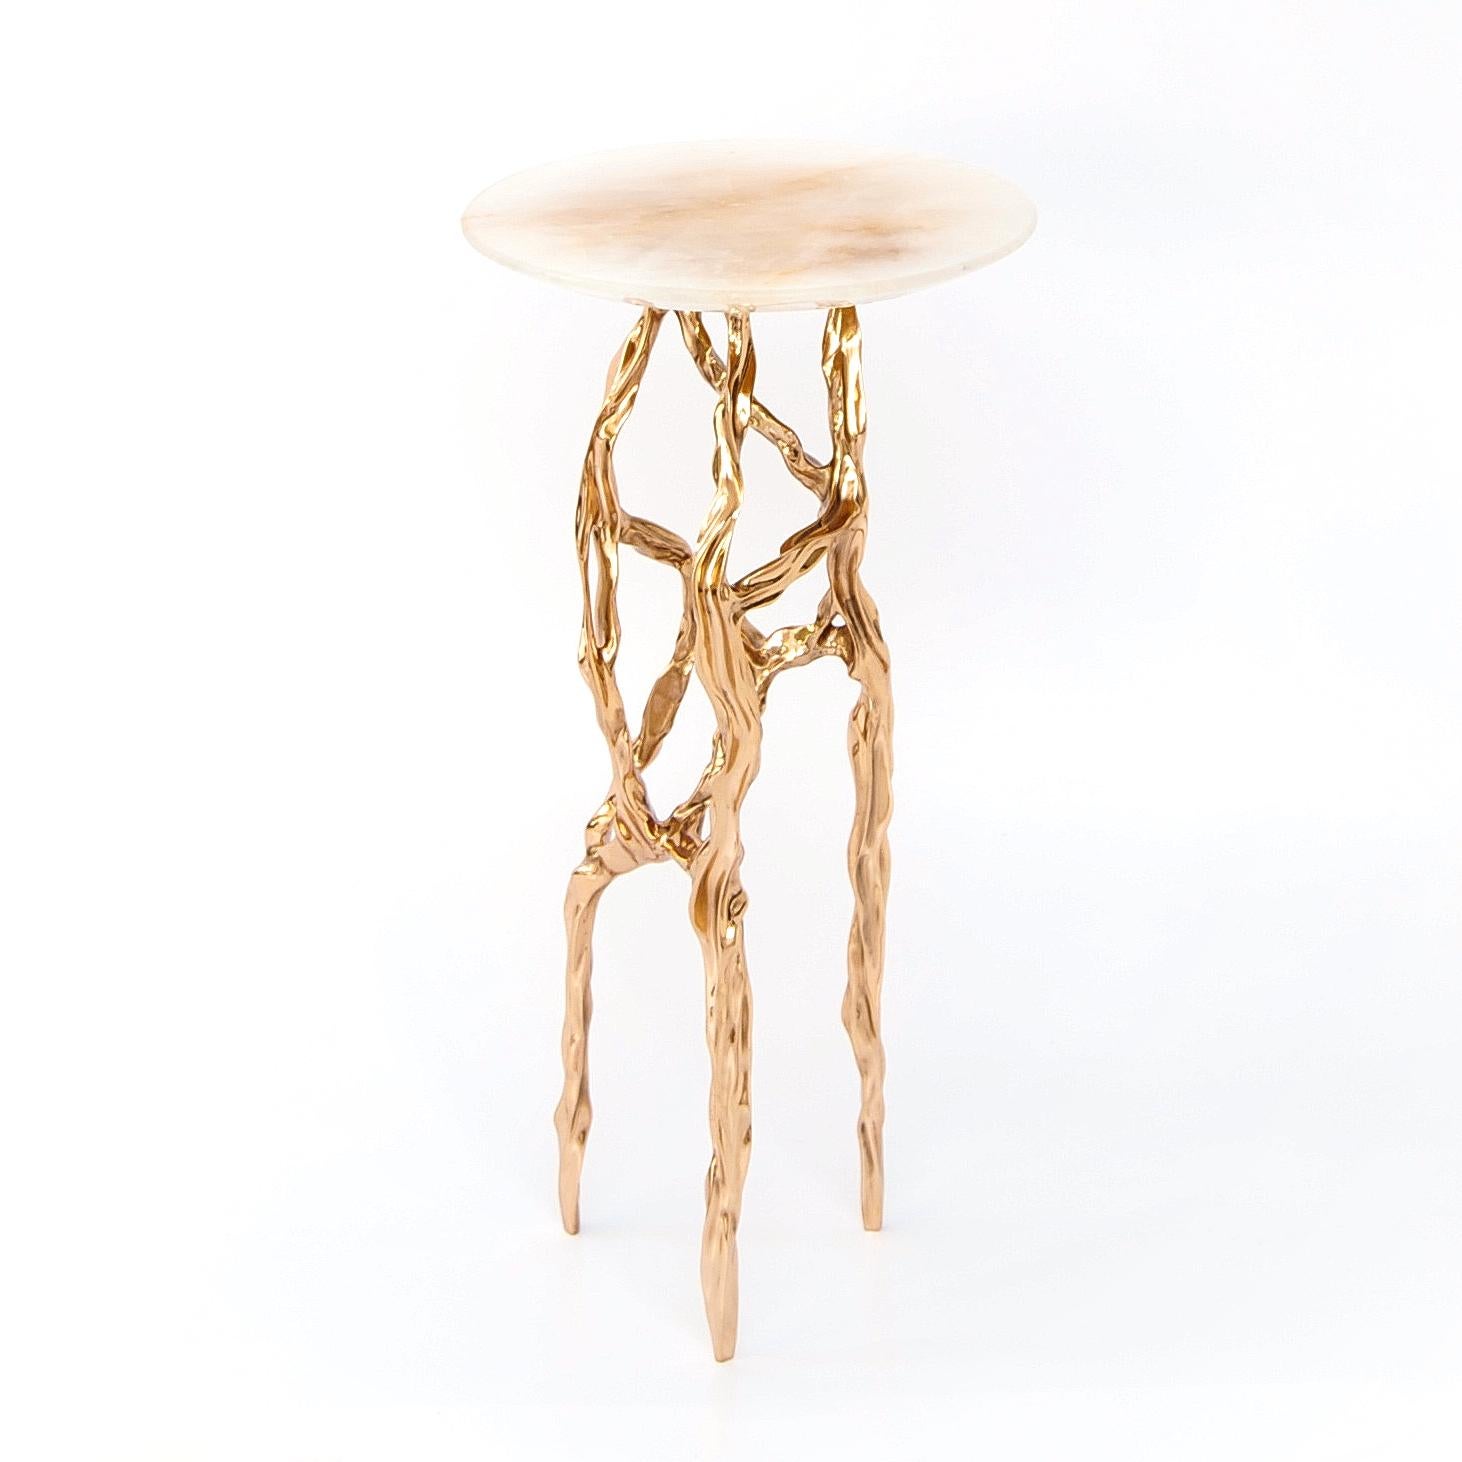 Polished bronze side table by Fakasaka Design.
Dimensions: W 18 cm D 38 cm H 62 cm.
Materials: polished bronze.
 